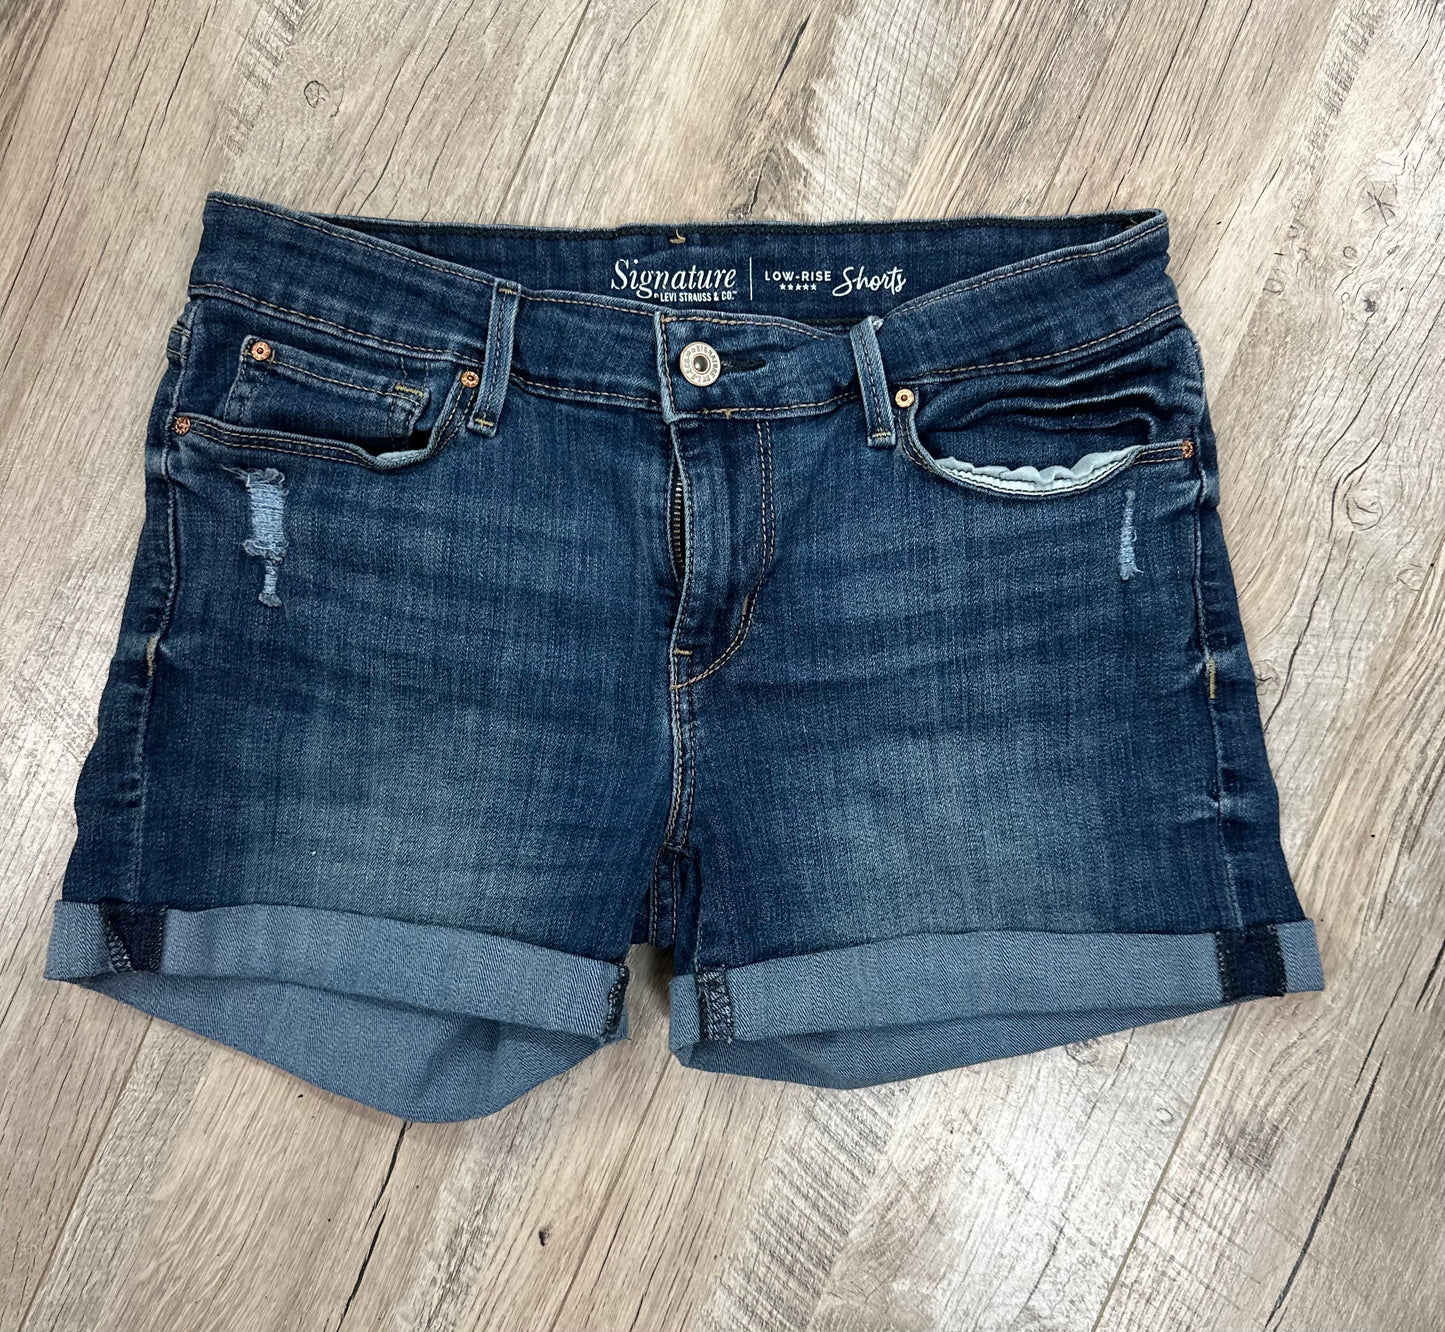 Levi Strauss Signature Dark Wash Blue Denim Cuffed Shorts Size 8 Low Rise